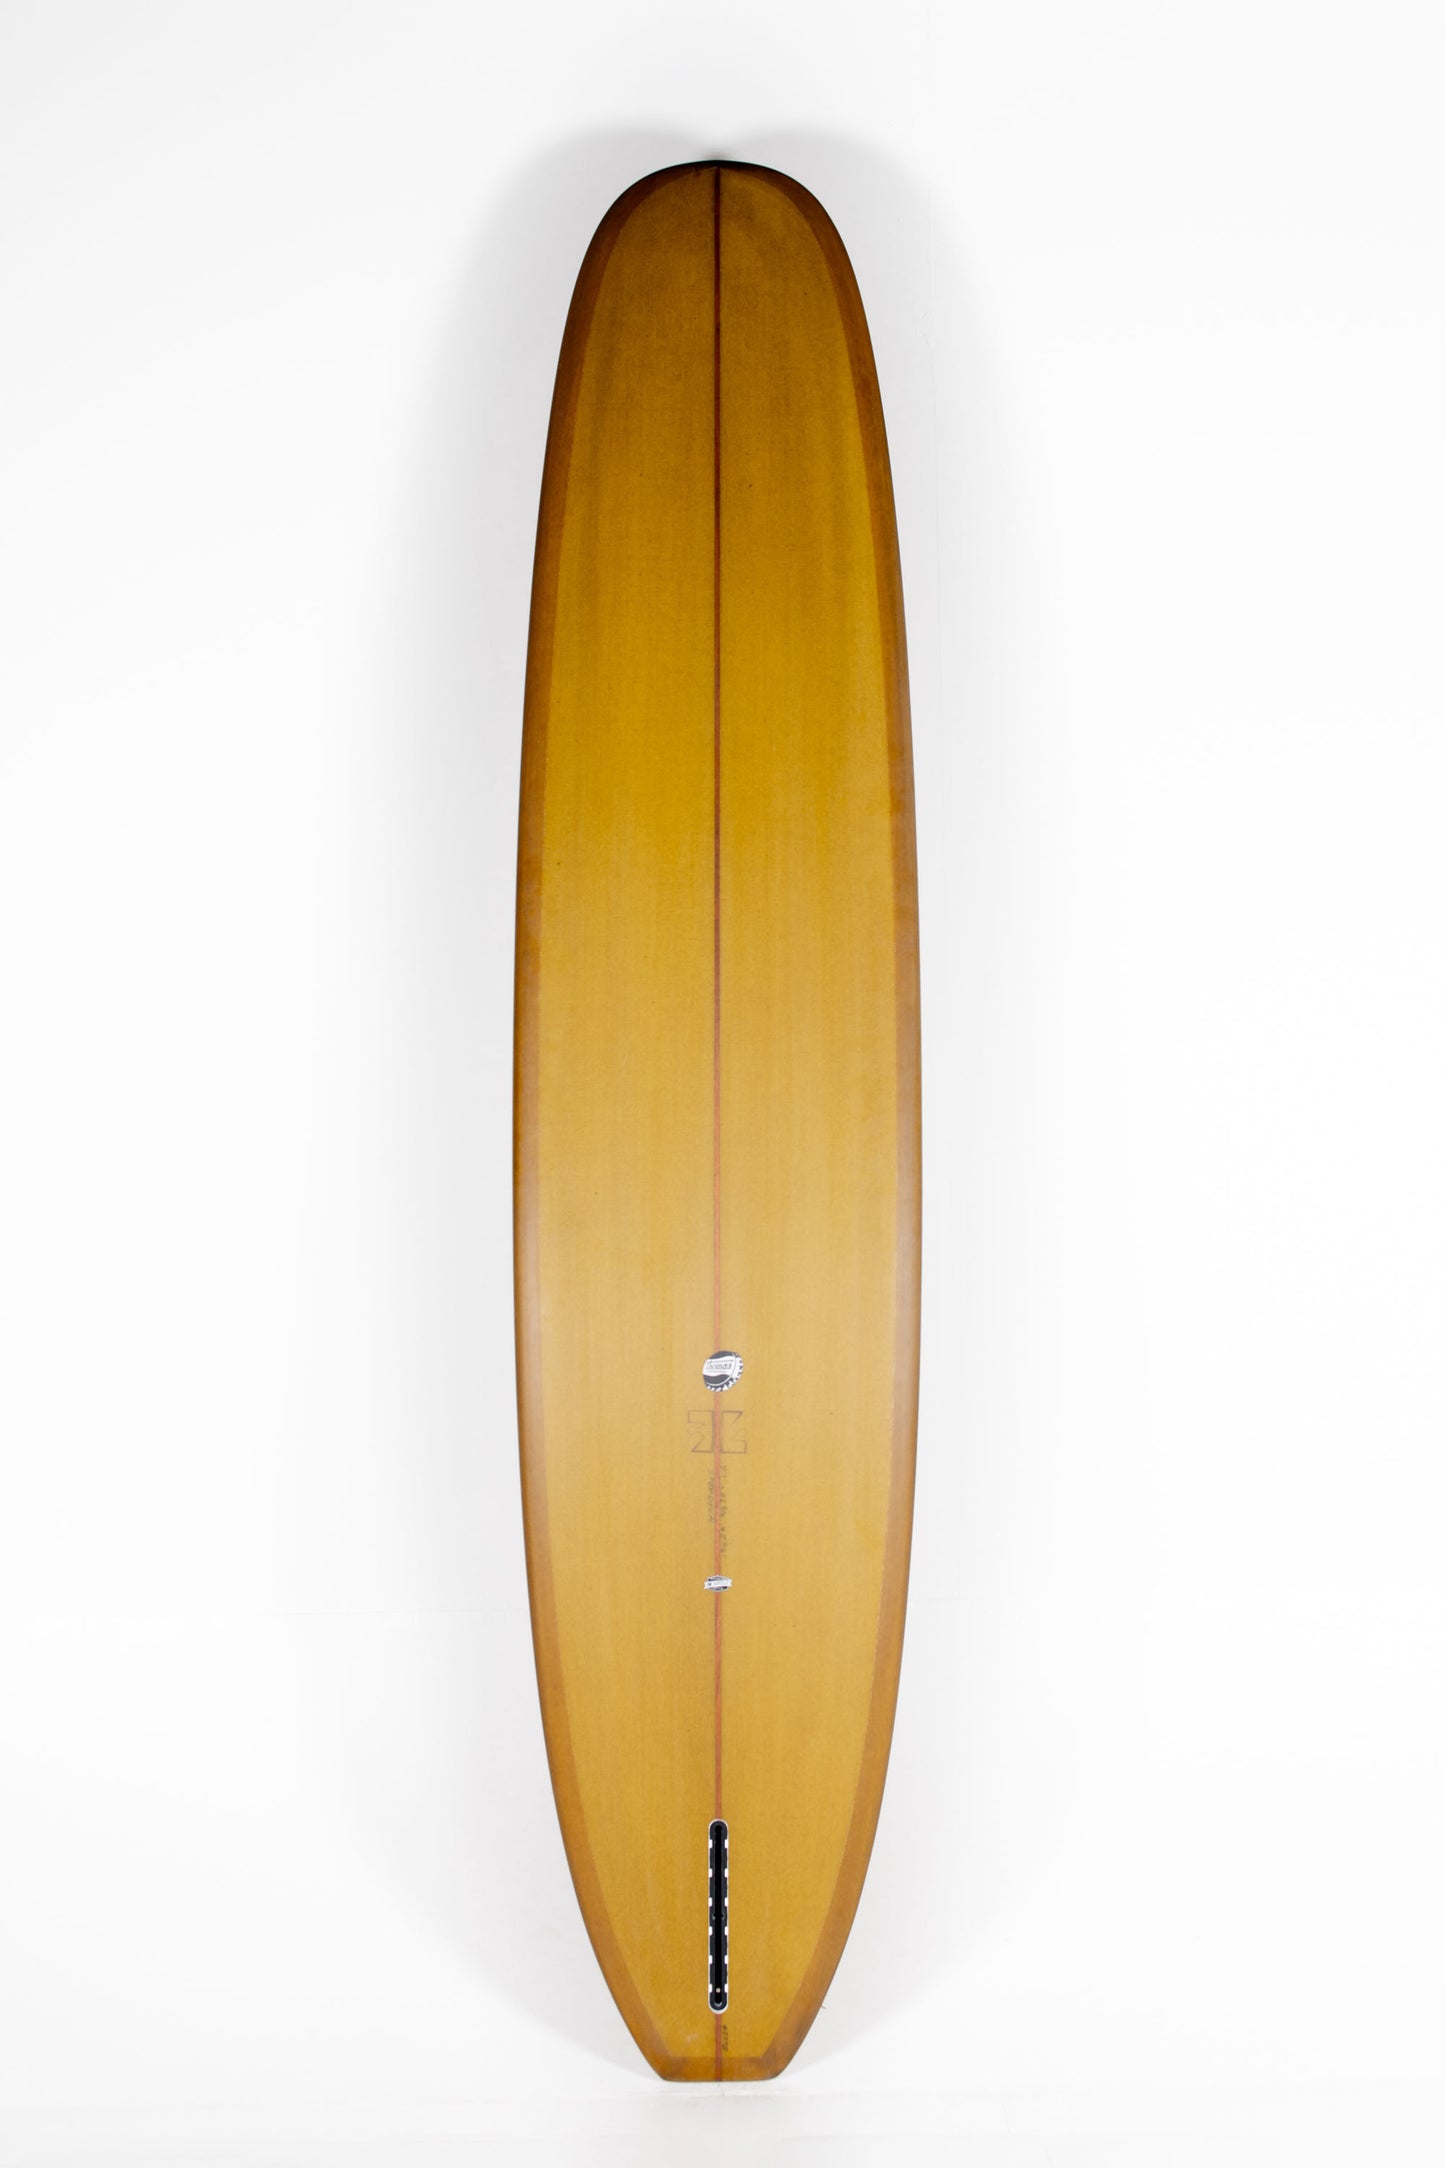 Pukas Surf Shop - Thomas Surfboards - STEP DECK - 9'1"x 22 3/4 x 2 3/4 - Ref. STEPDECK91